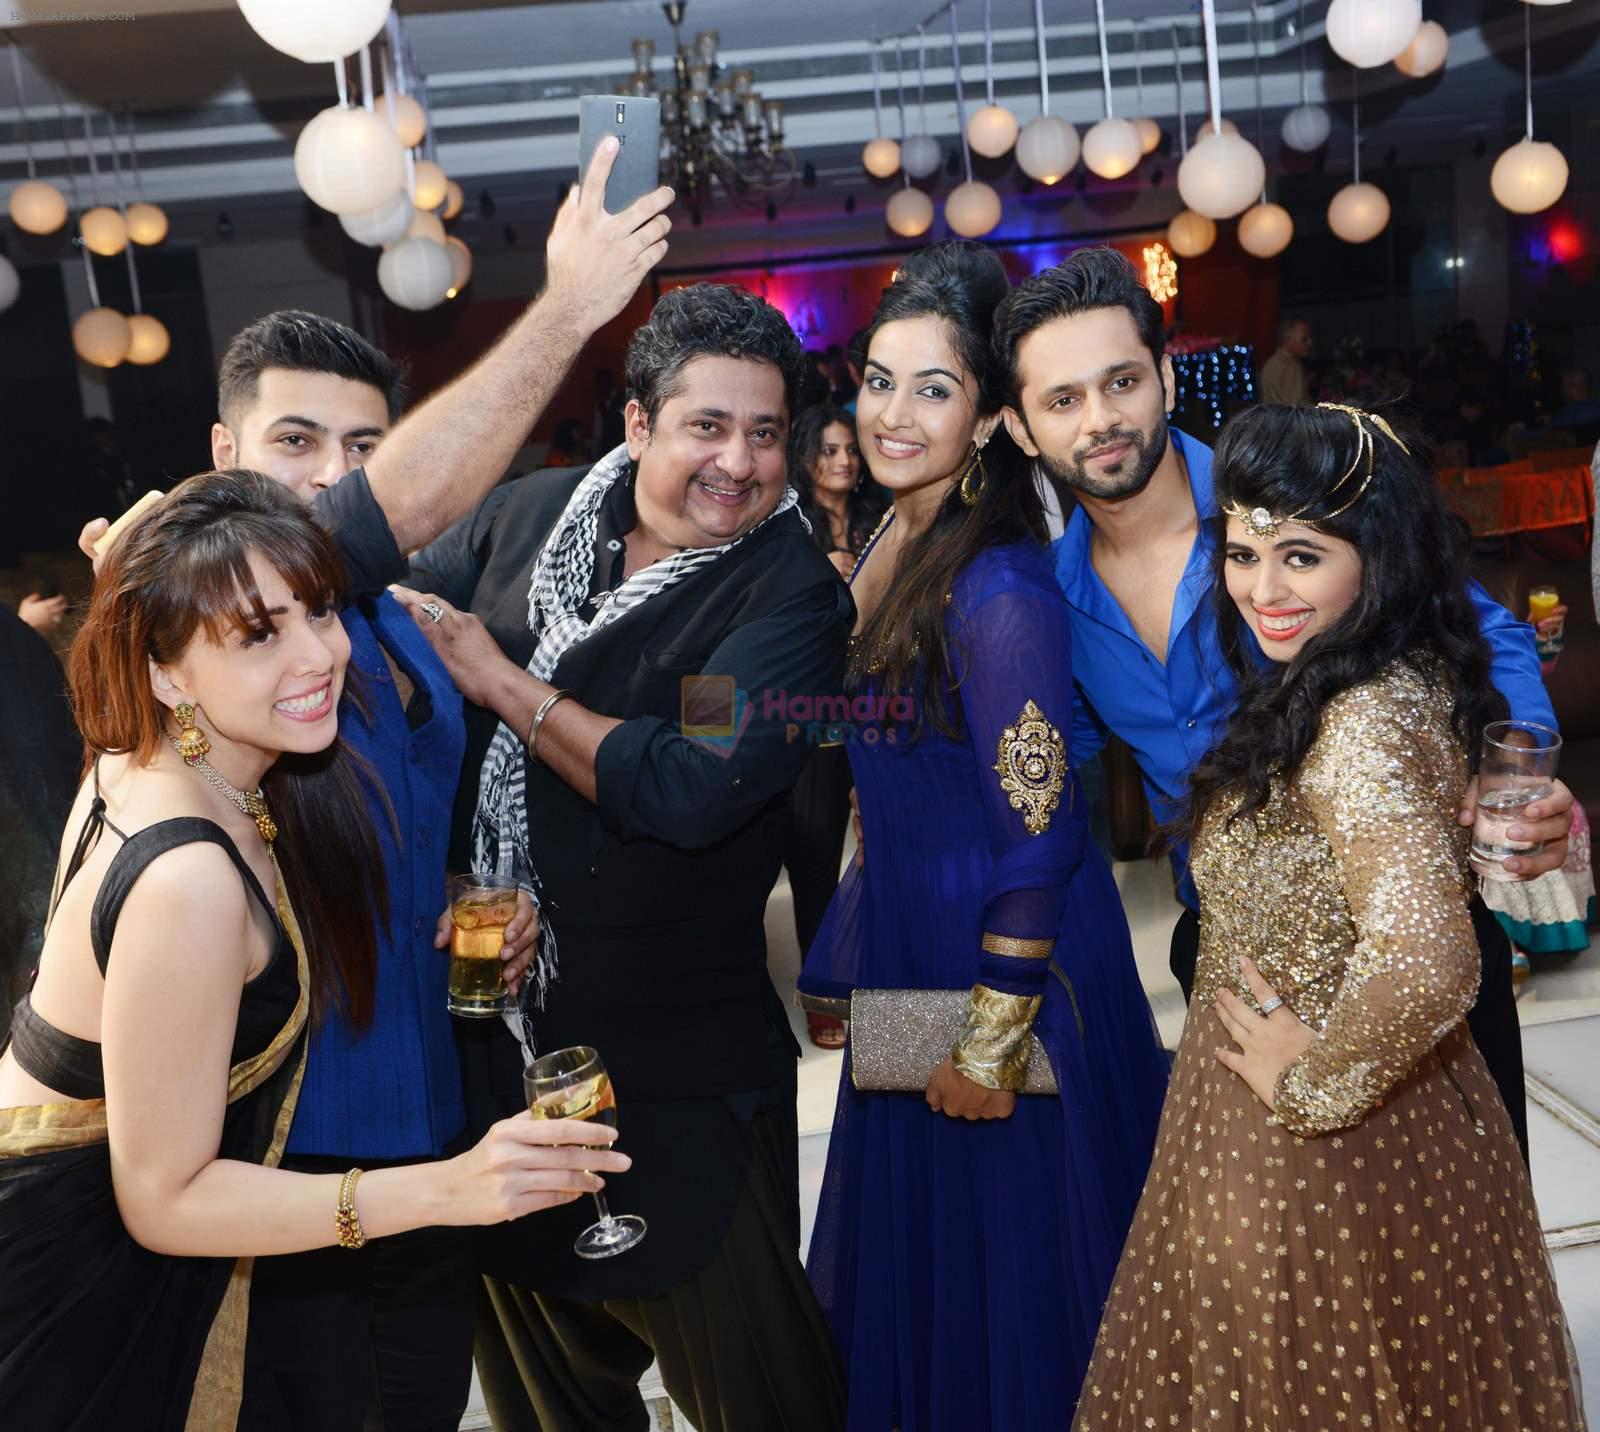 rahul vaidya + Megha israni + Dhawal+Jankee + Bhavin + harshi at Luv Hemali Sangget PARTY